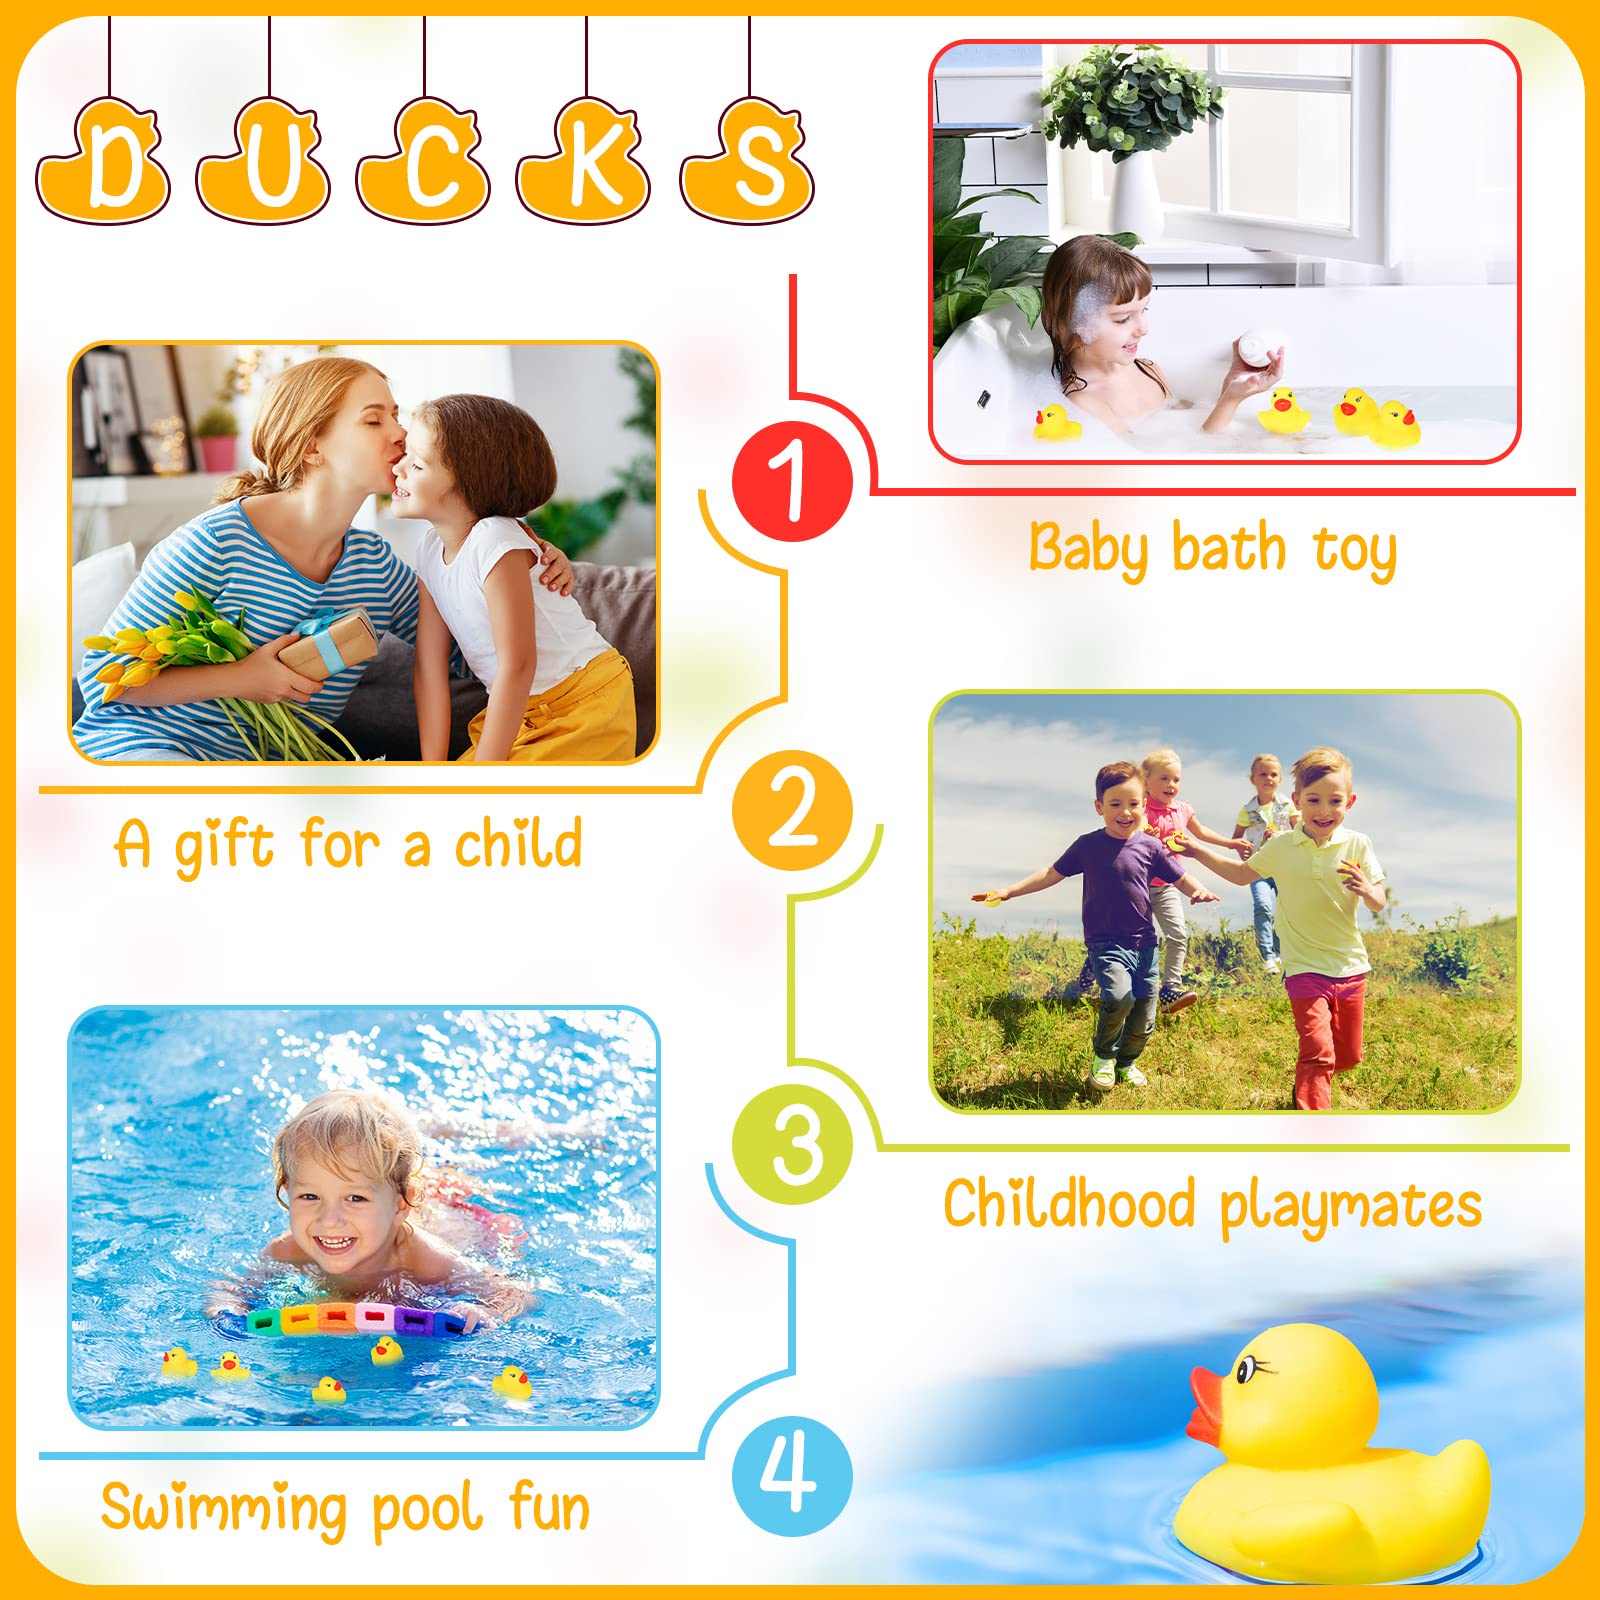 600 Pcs Mini Rubber Ducks in Bulk Bath Toy Squeak Tiny Ducks for Kids Bathtub Shower Birthday Favors Party Decoration Gift, 1.57 x 1.57 x 1.18 Inches (Yellow)